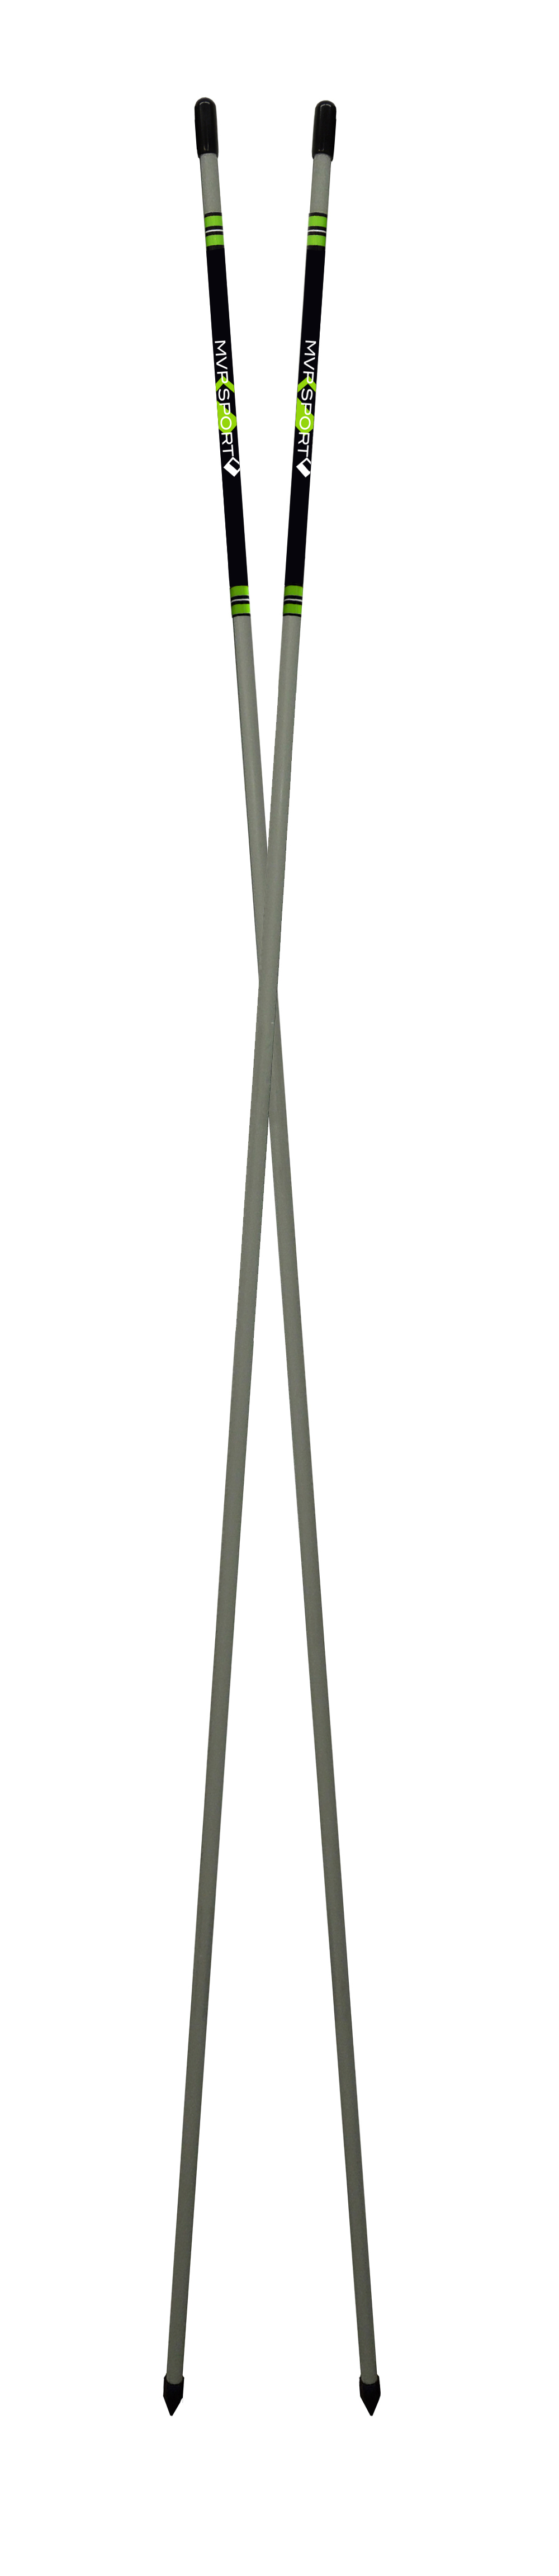 MVP Sport Golf Alignment Sticks (gray) - image 1 of 2